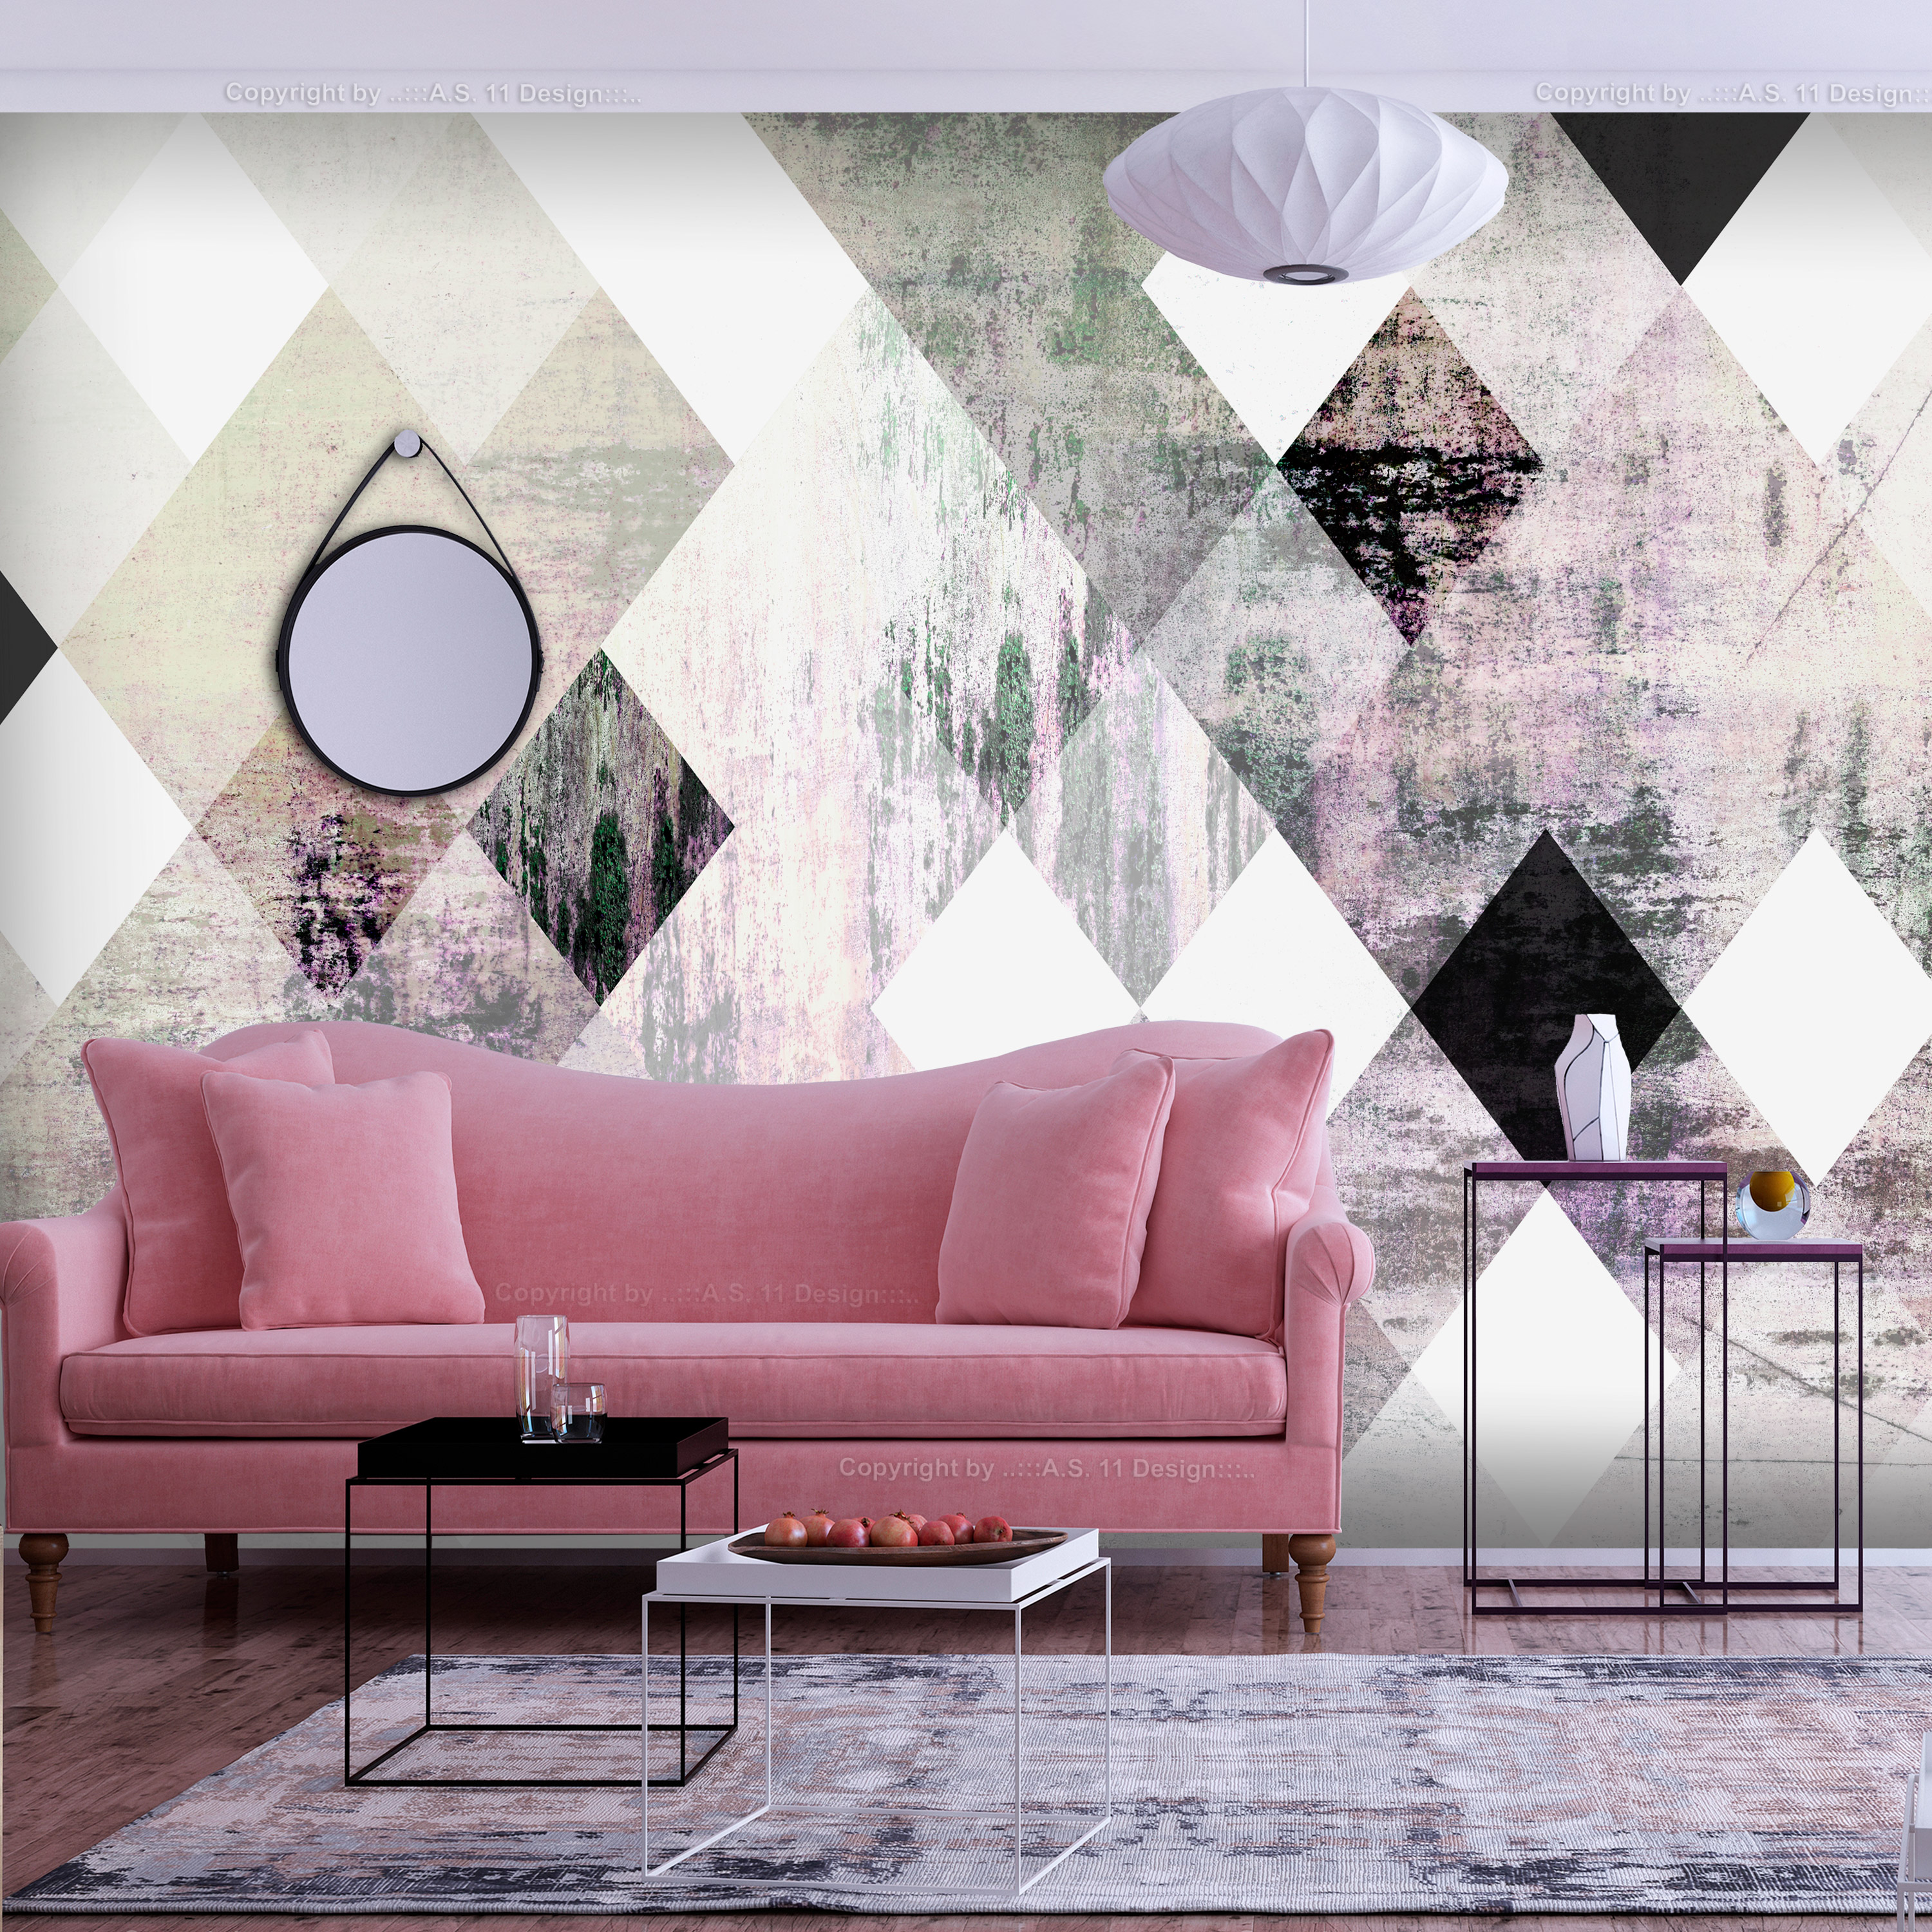 Self-adhesive Wallpaper - Rhombic Chessboard (Pink) - 441x315